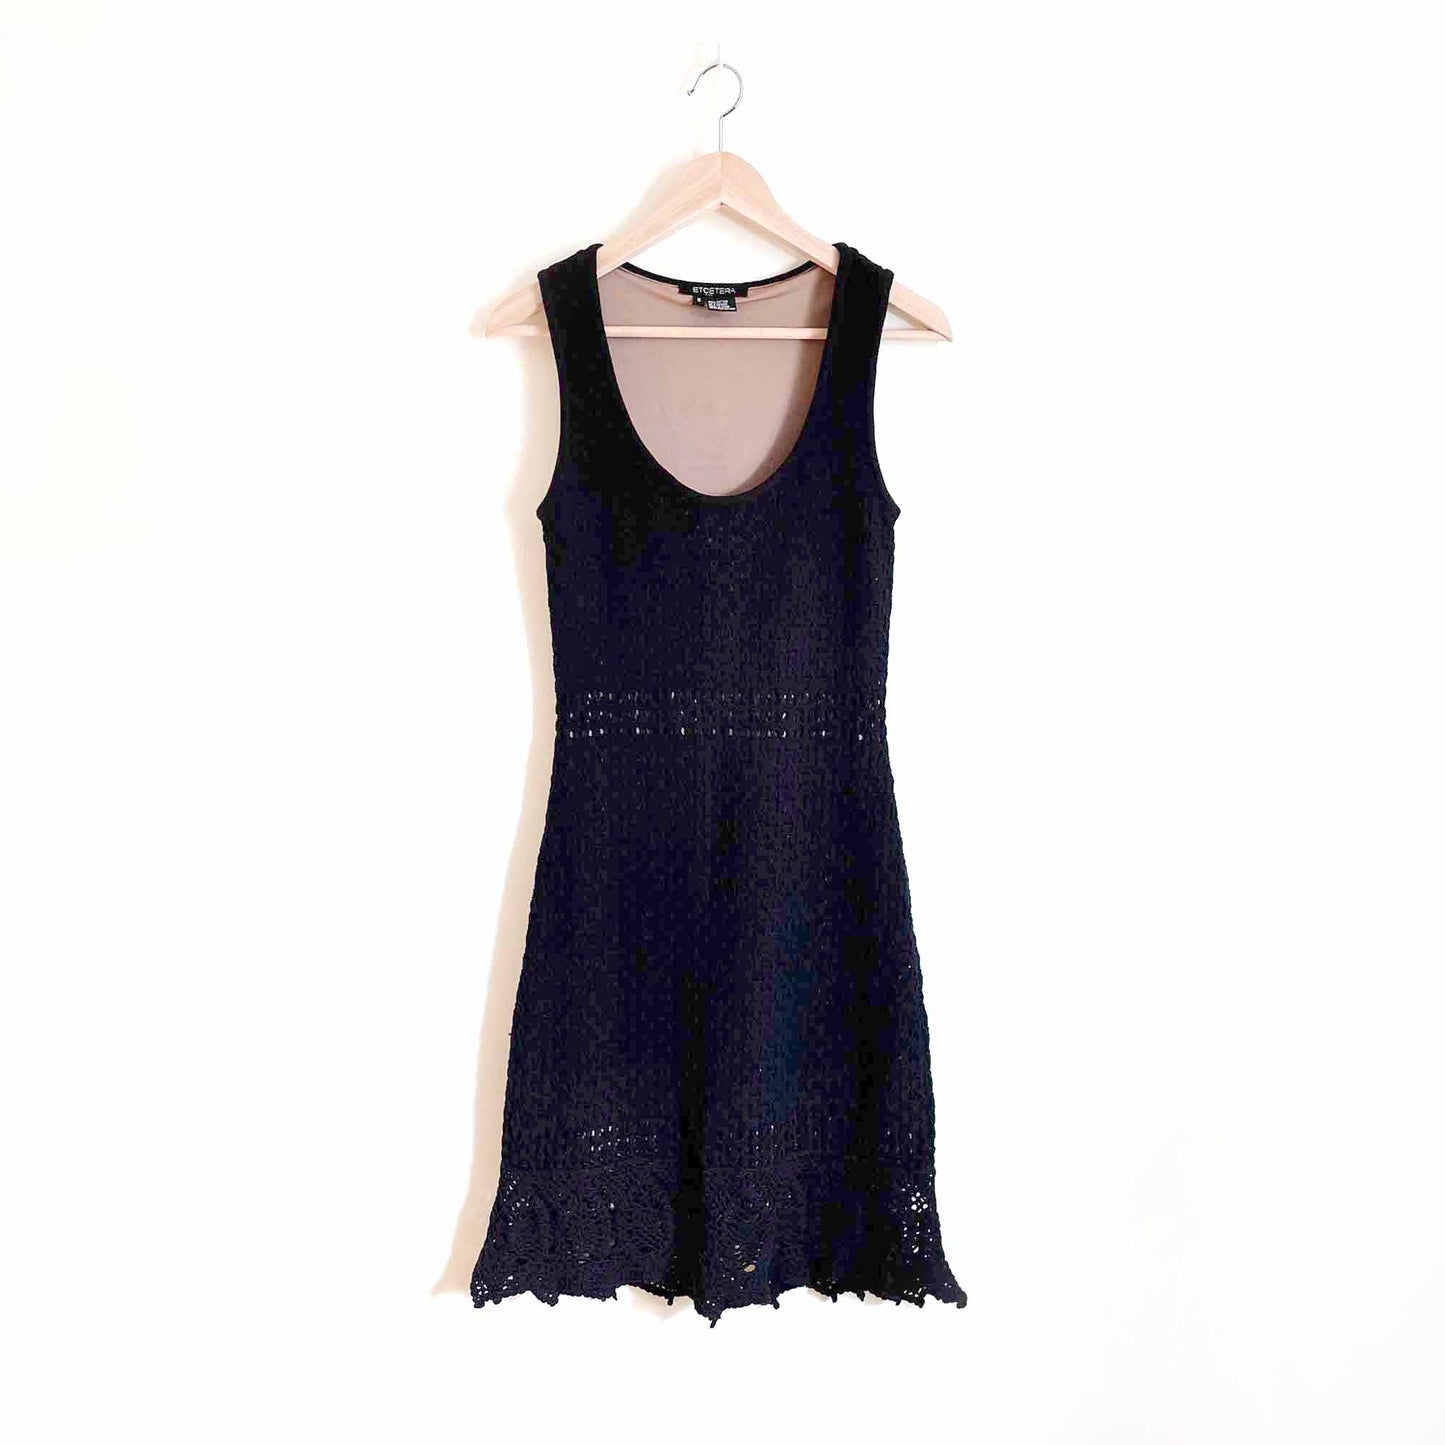 etcetera black crochet tank dress - size small